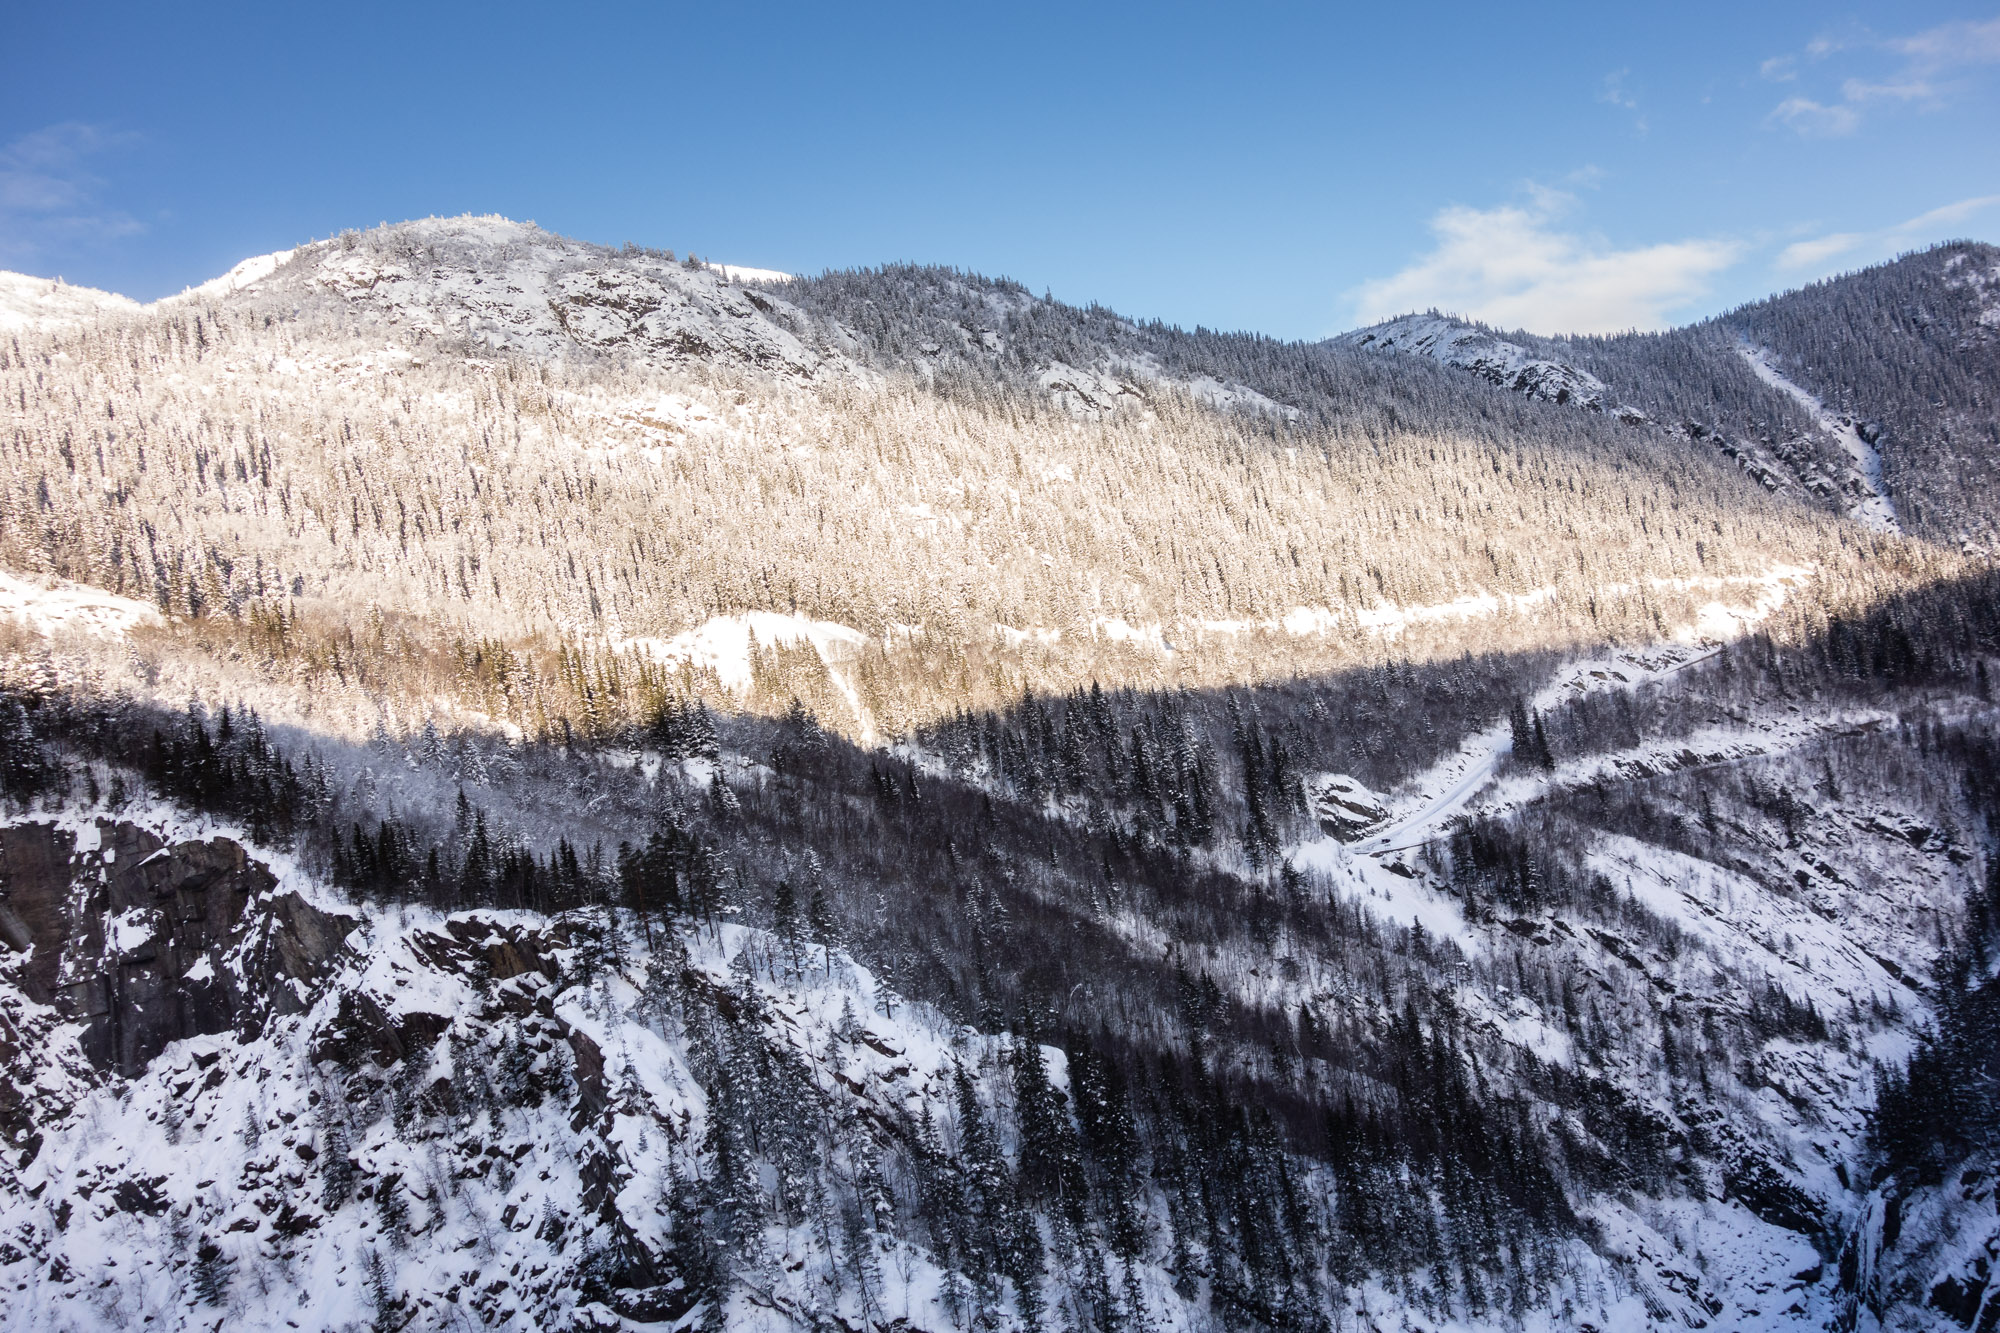 norwegian winter ice climbing on juvsoyla rjukan